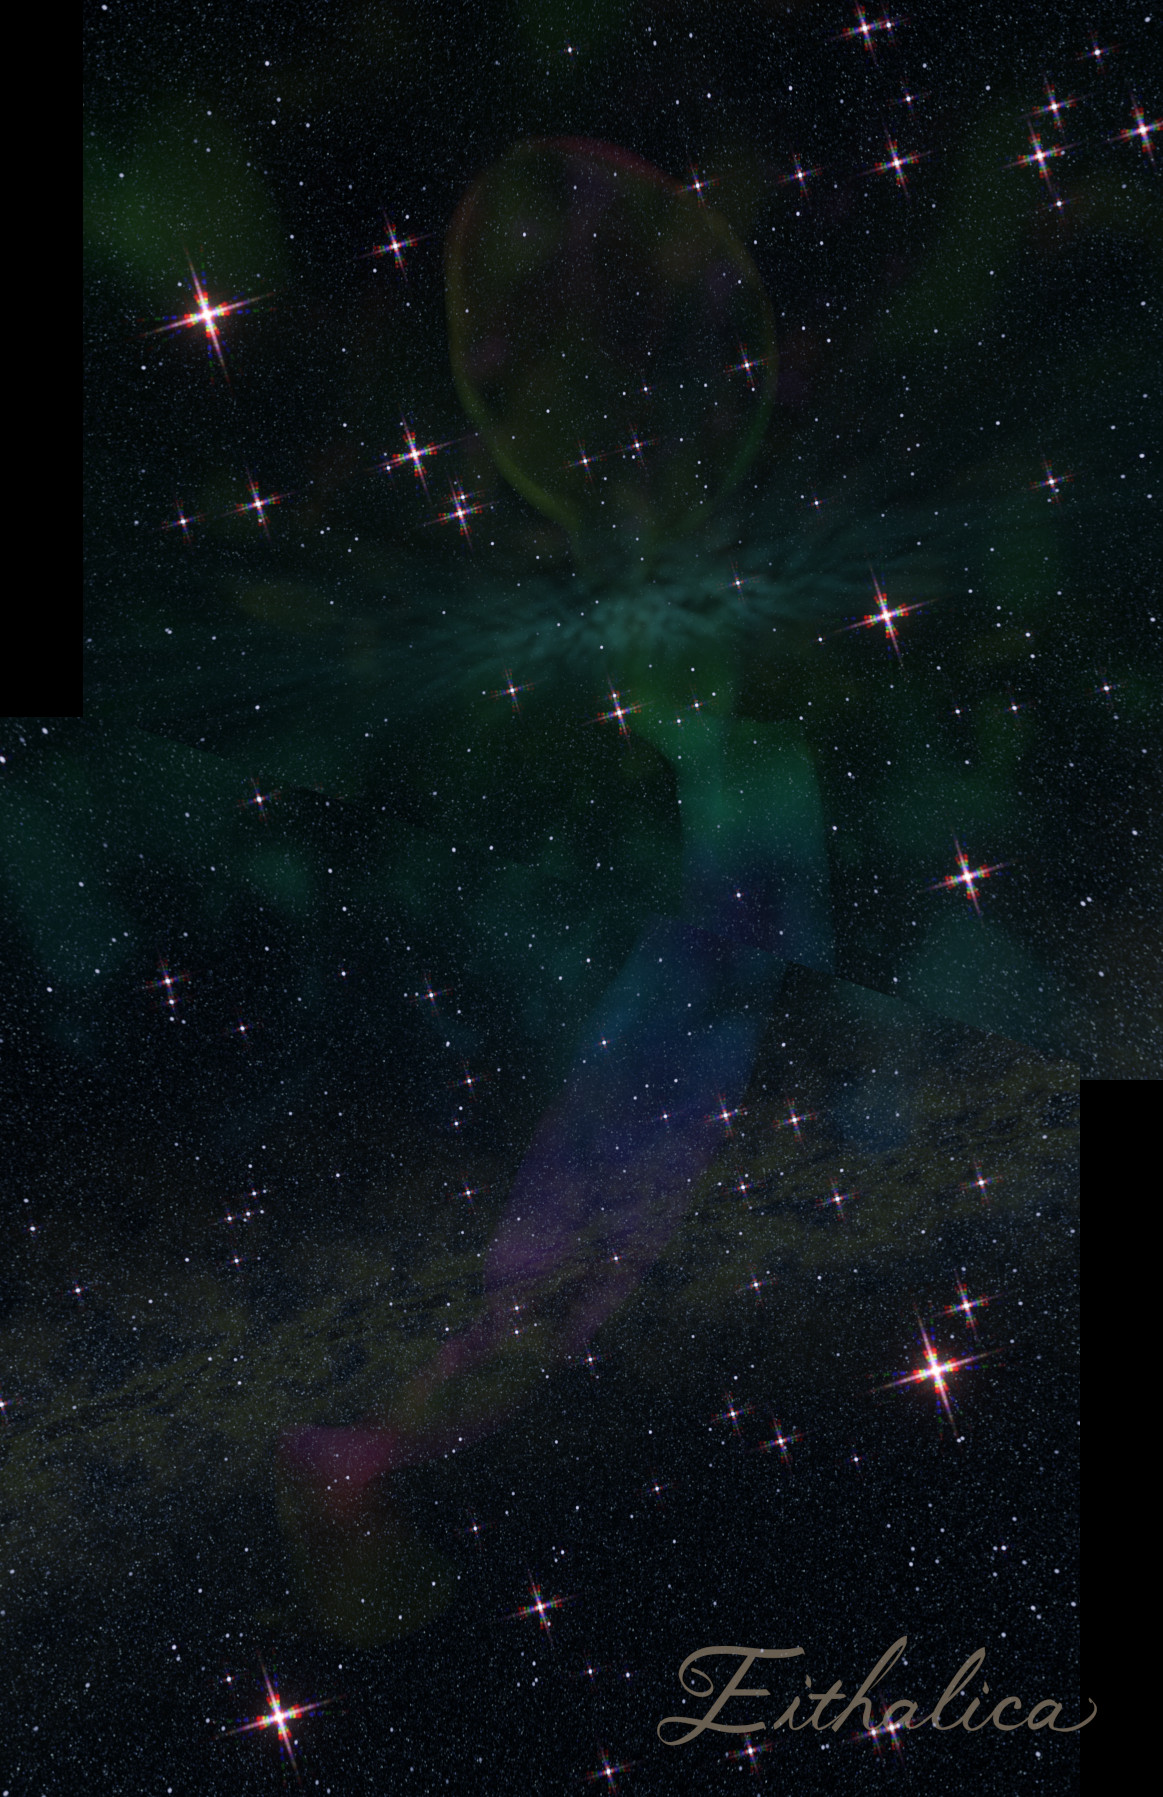 20221107-scepter nebula-mosaic.jpg